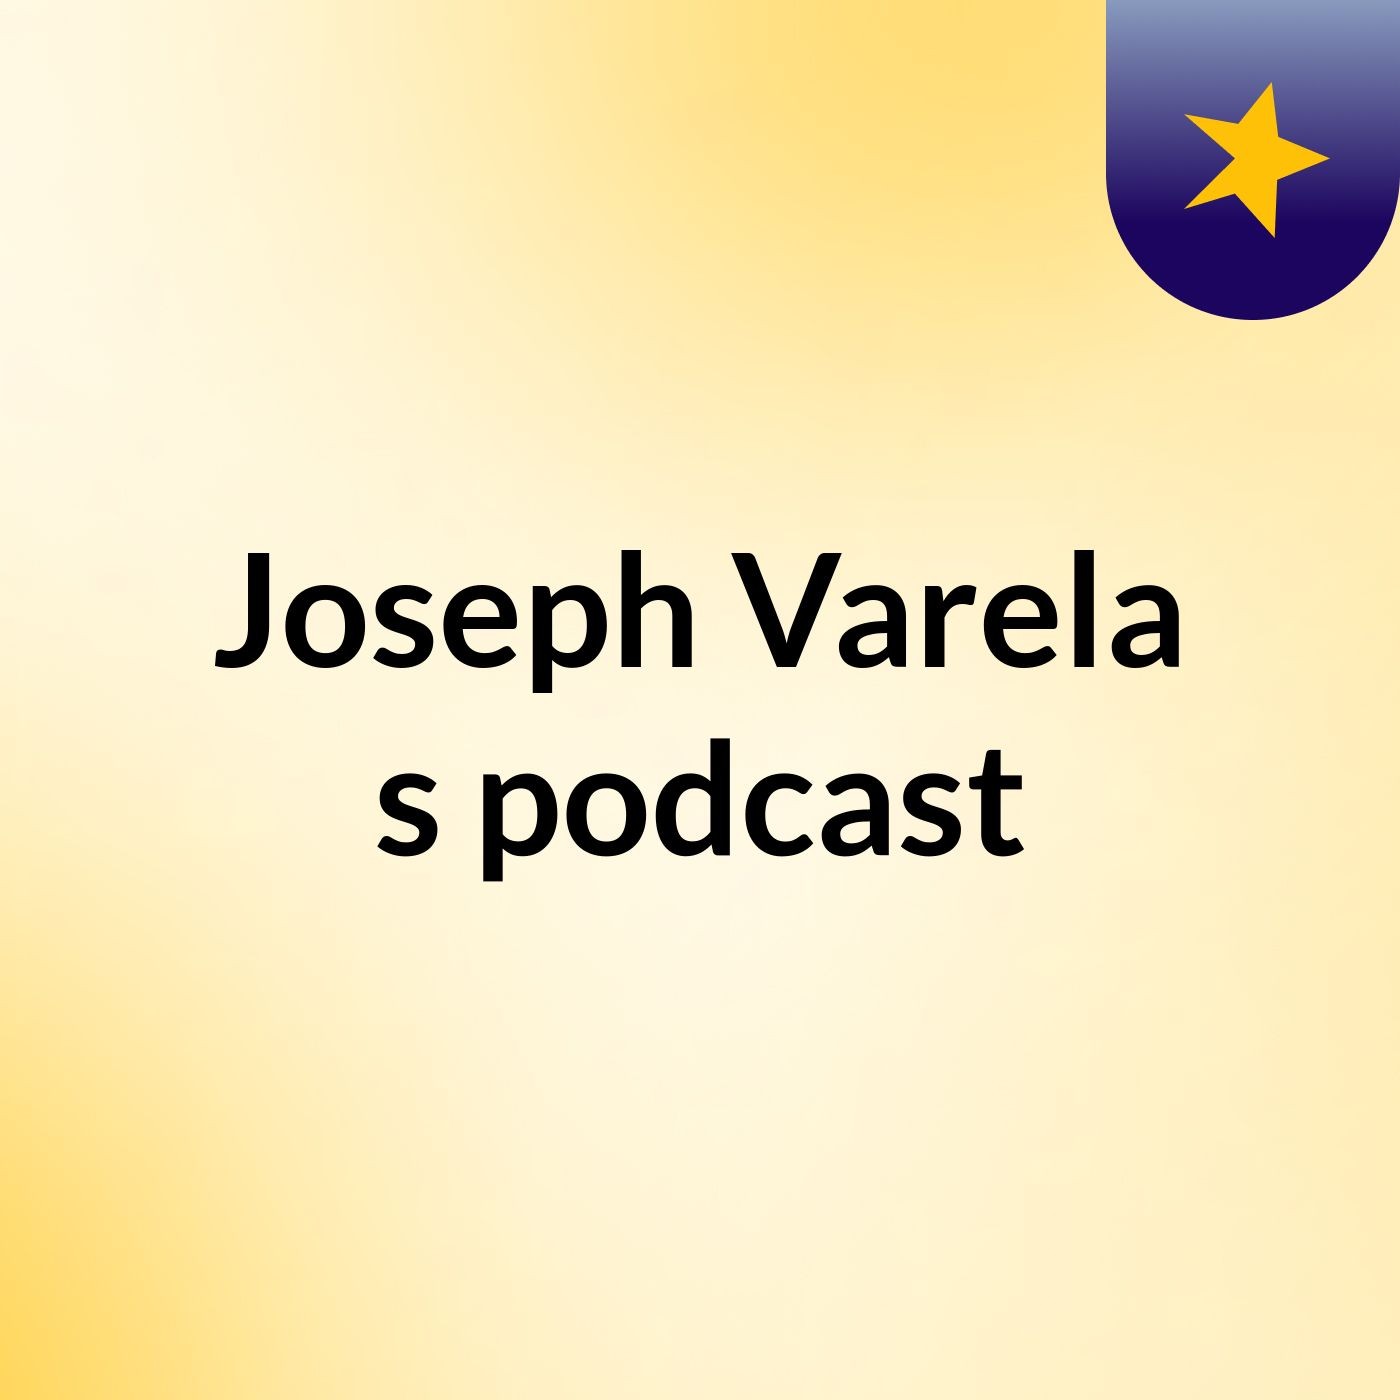 Joseph Varela's podcast